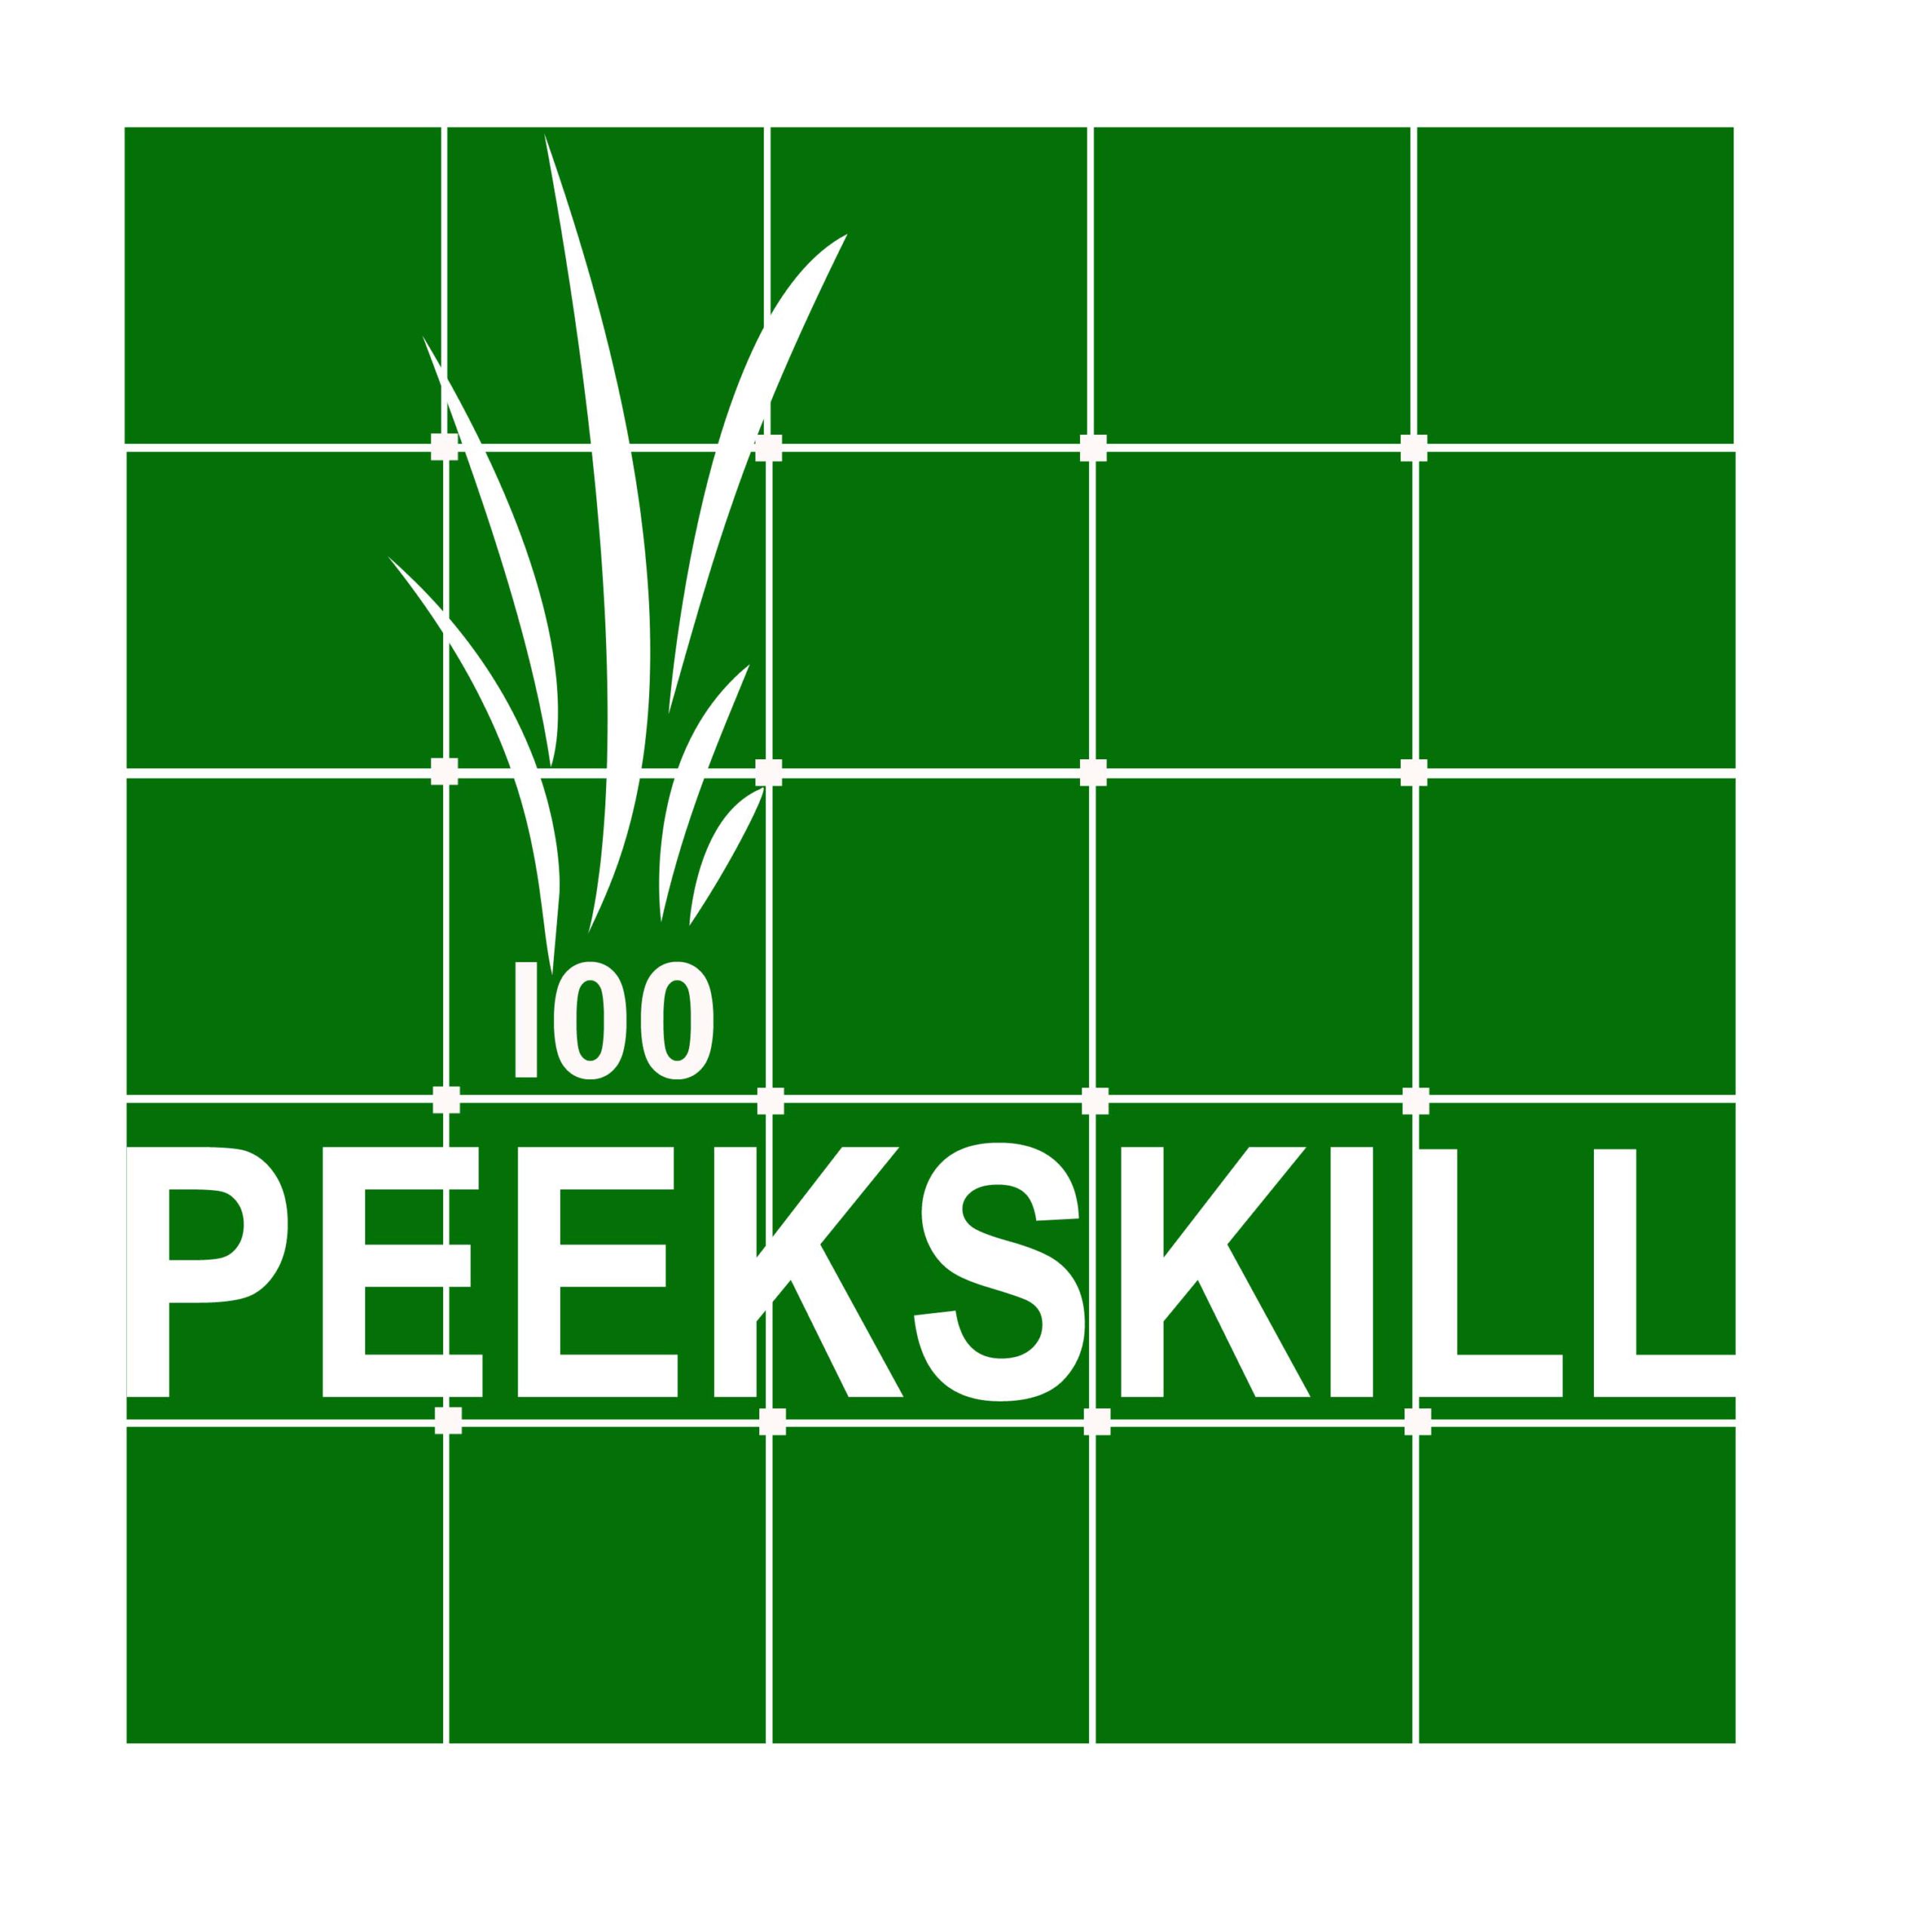 Peekskill100 Graphic